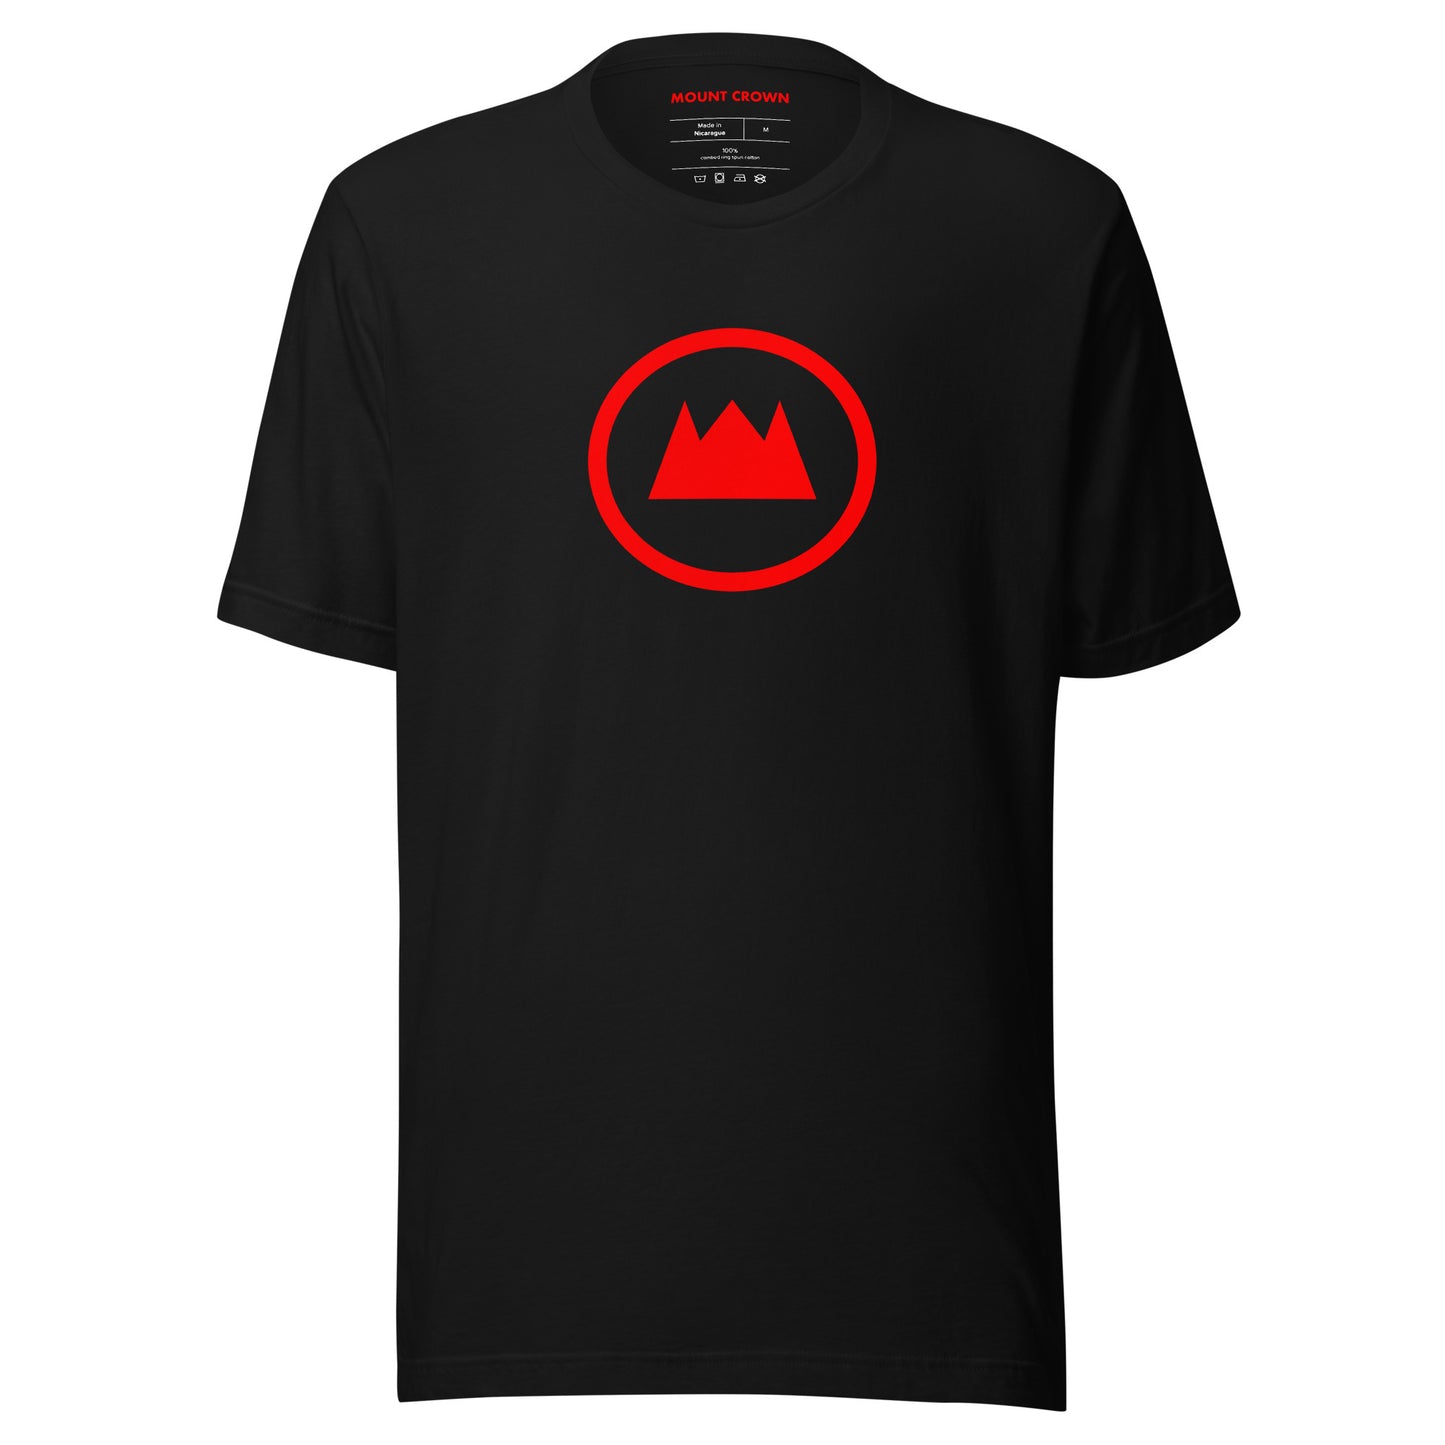 MOUNT CROWN (R) T-shirt